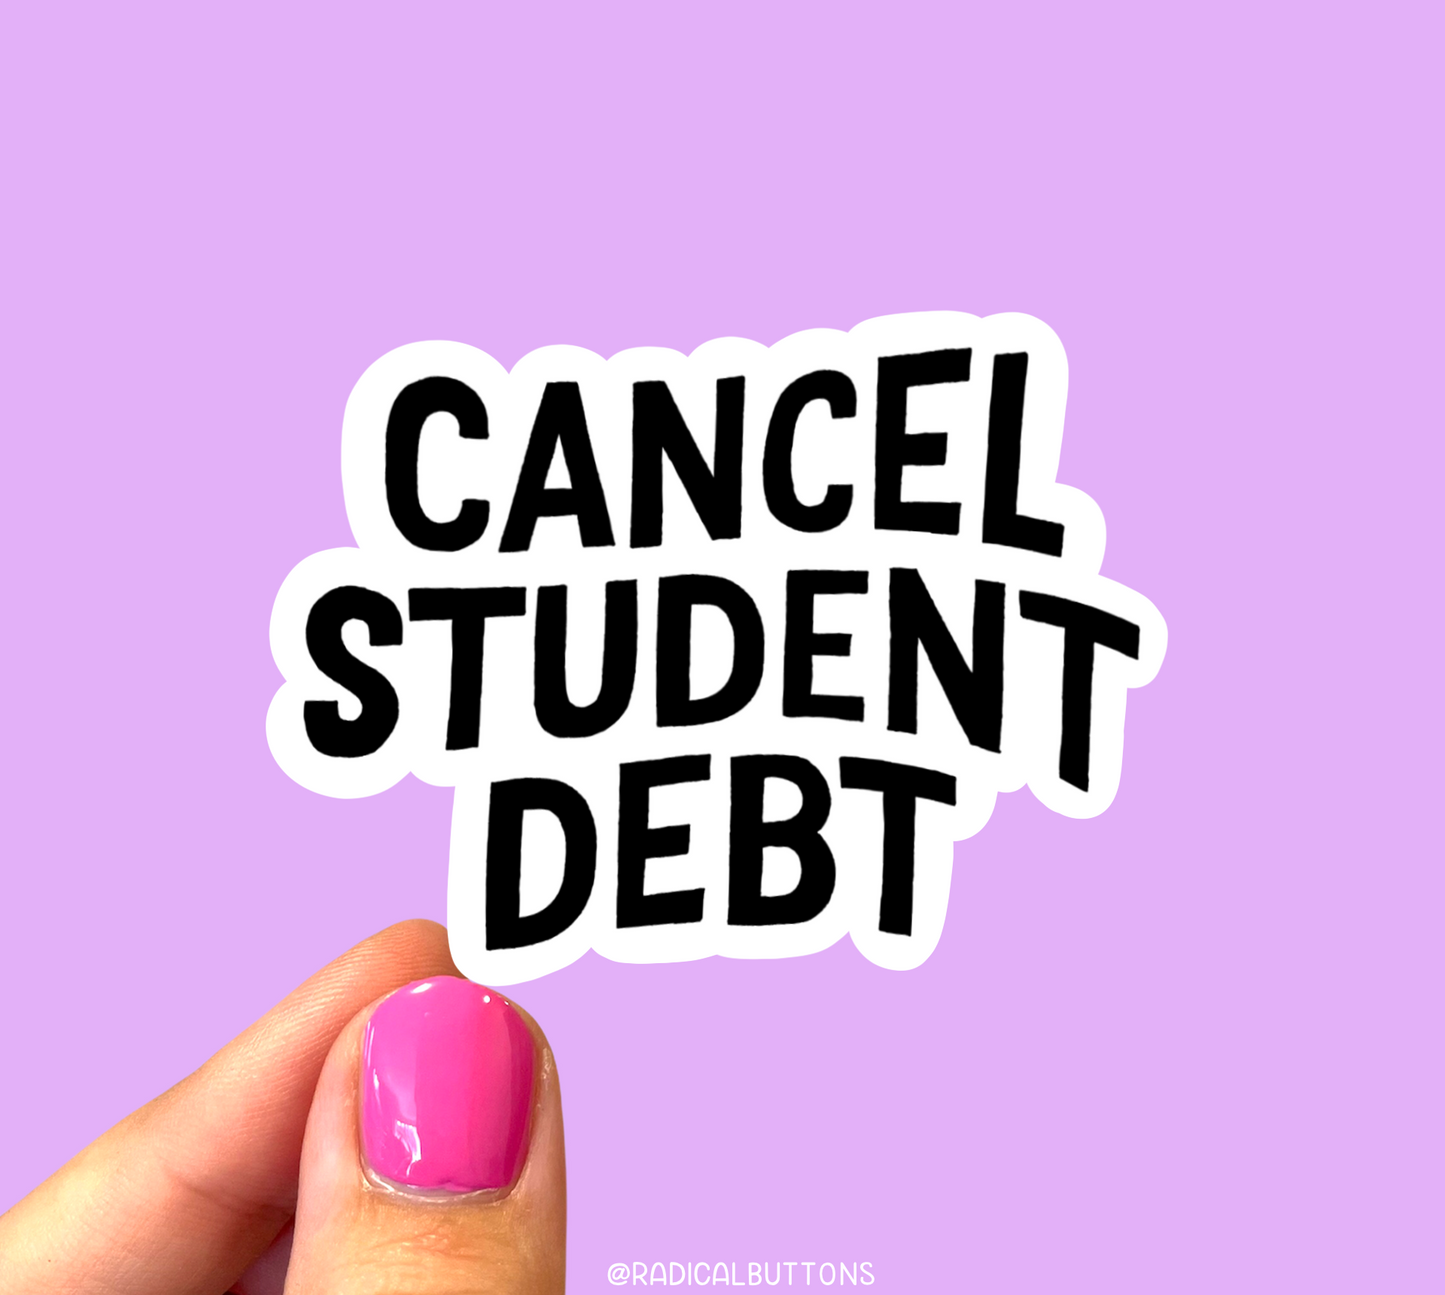 Cancel student debt